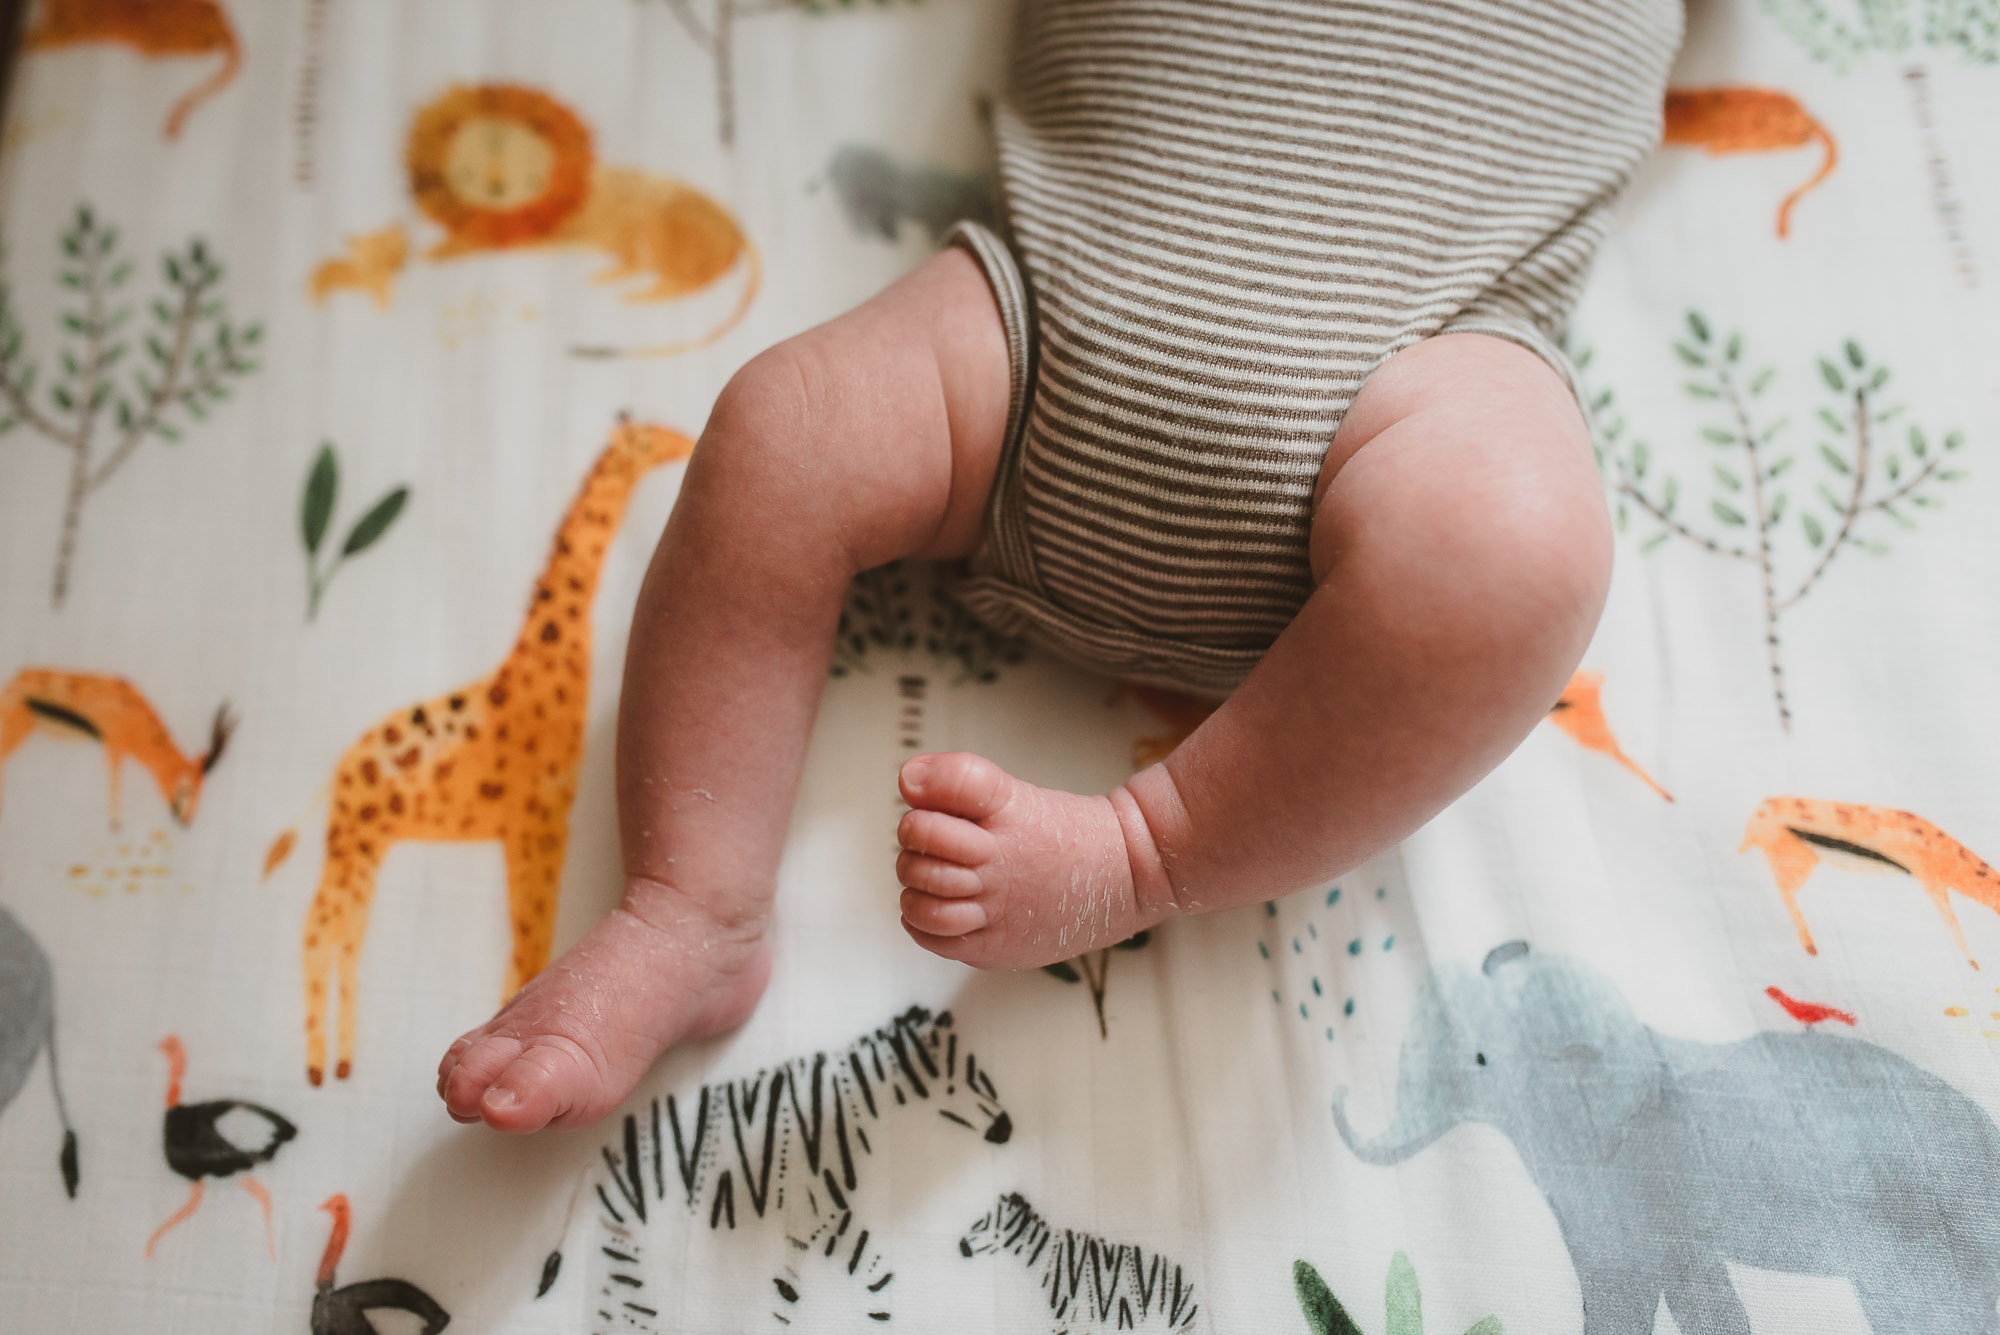 Vancouver newborn photographer shows little newborn baby legs